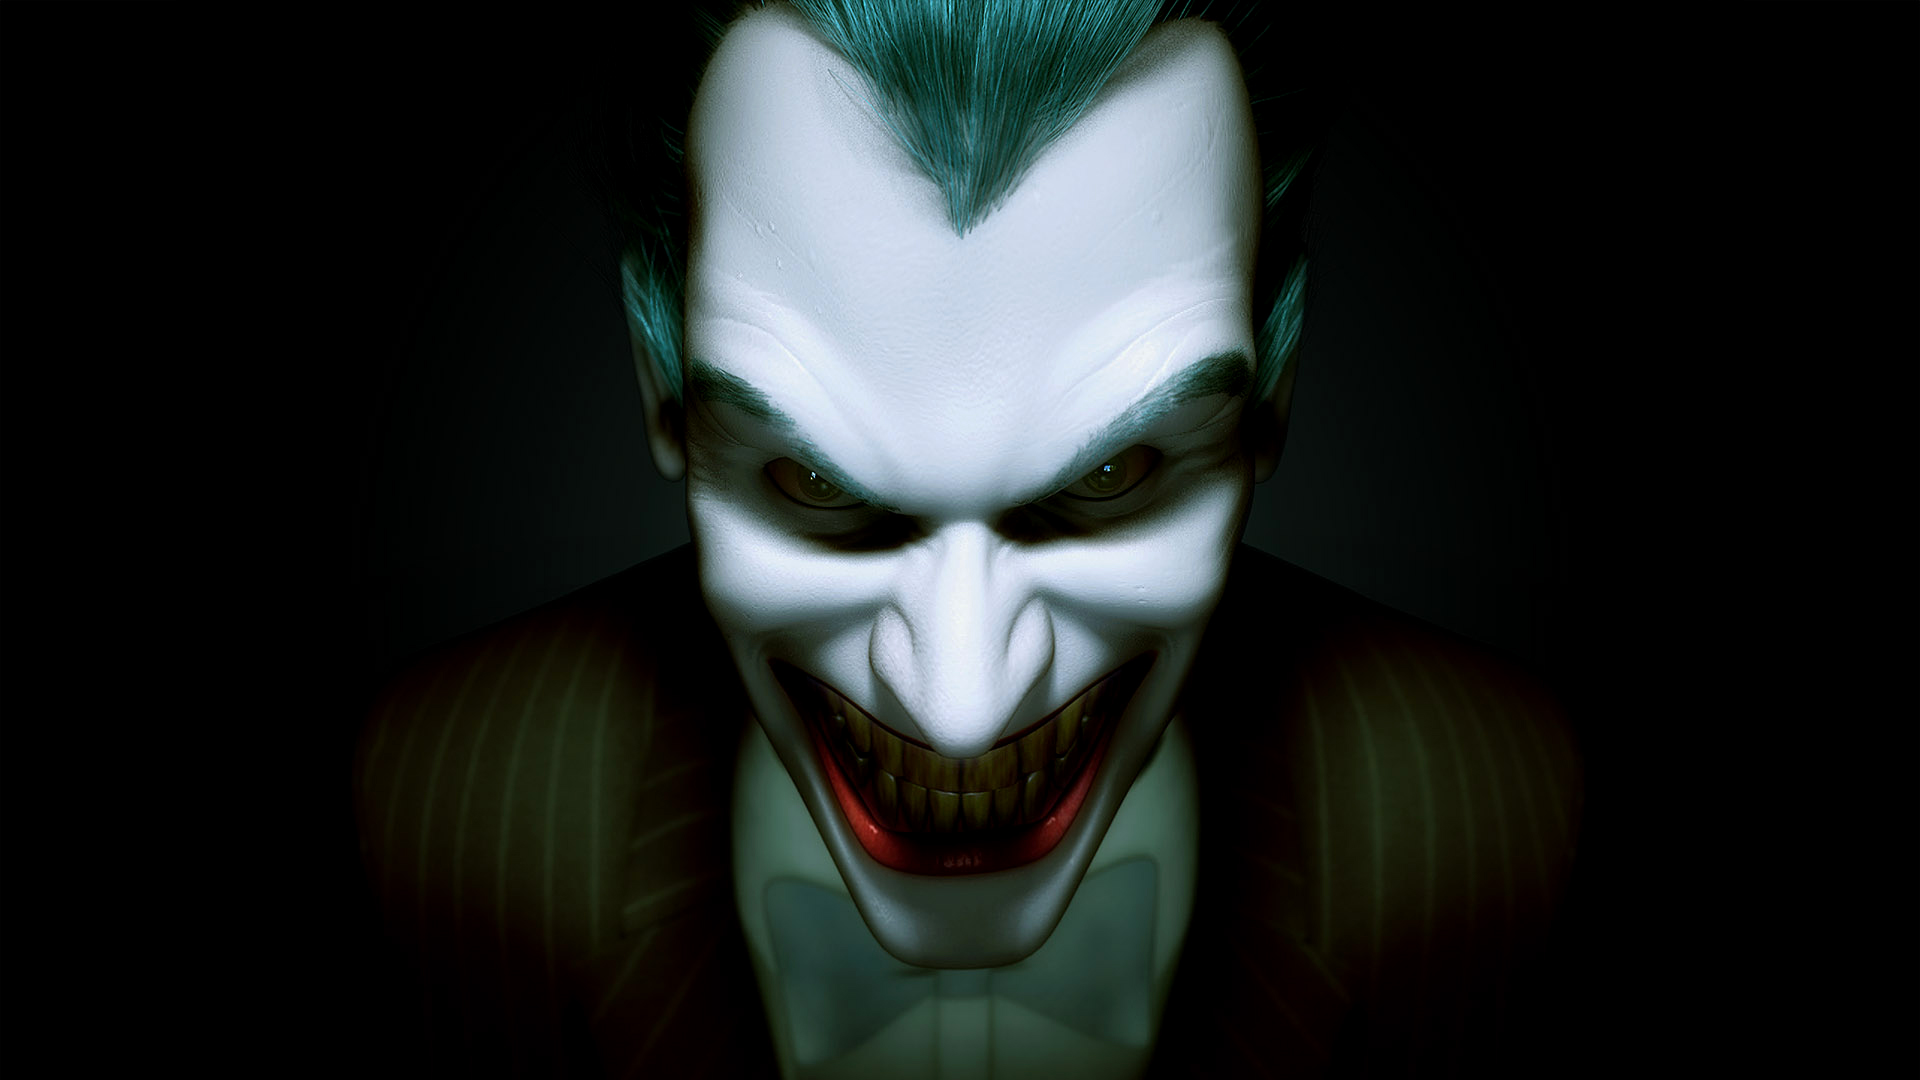 [46+] Joker Wallpaper for Windows | WallpaperSafari.com